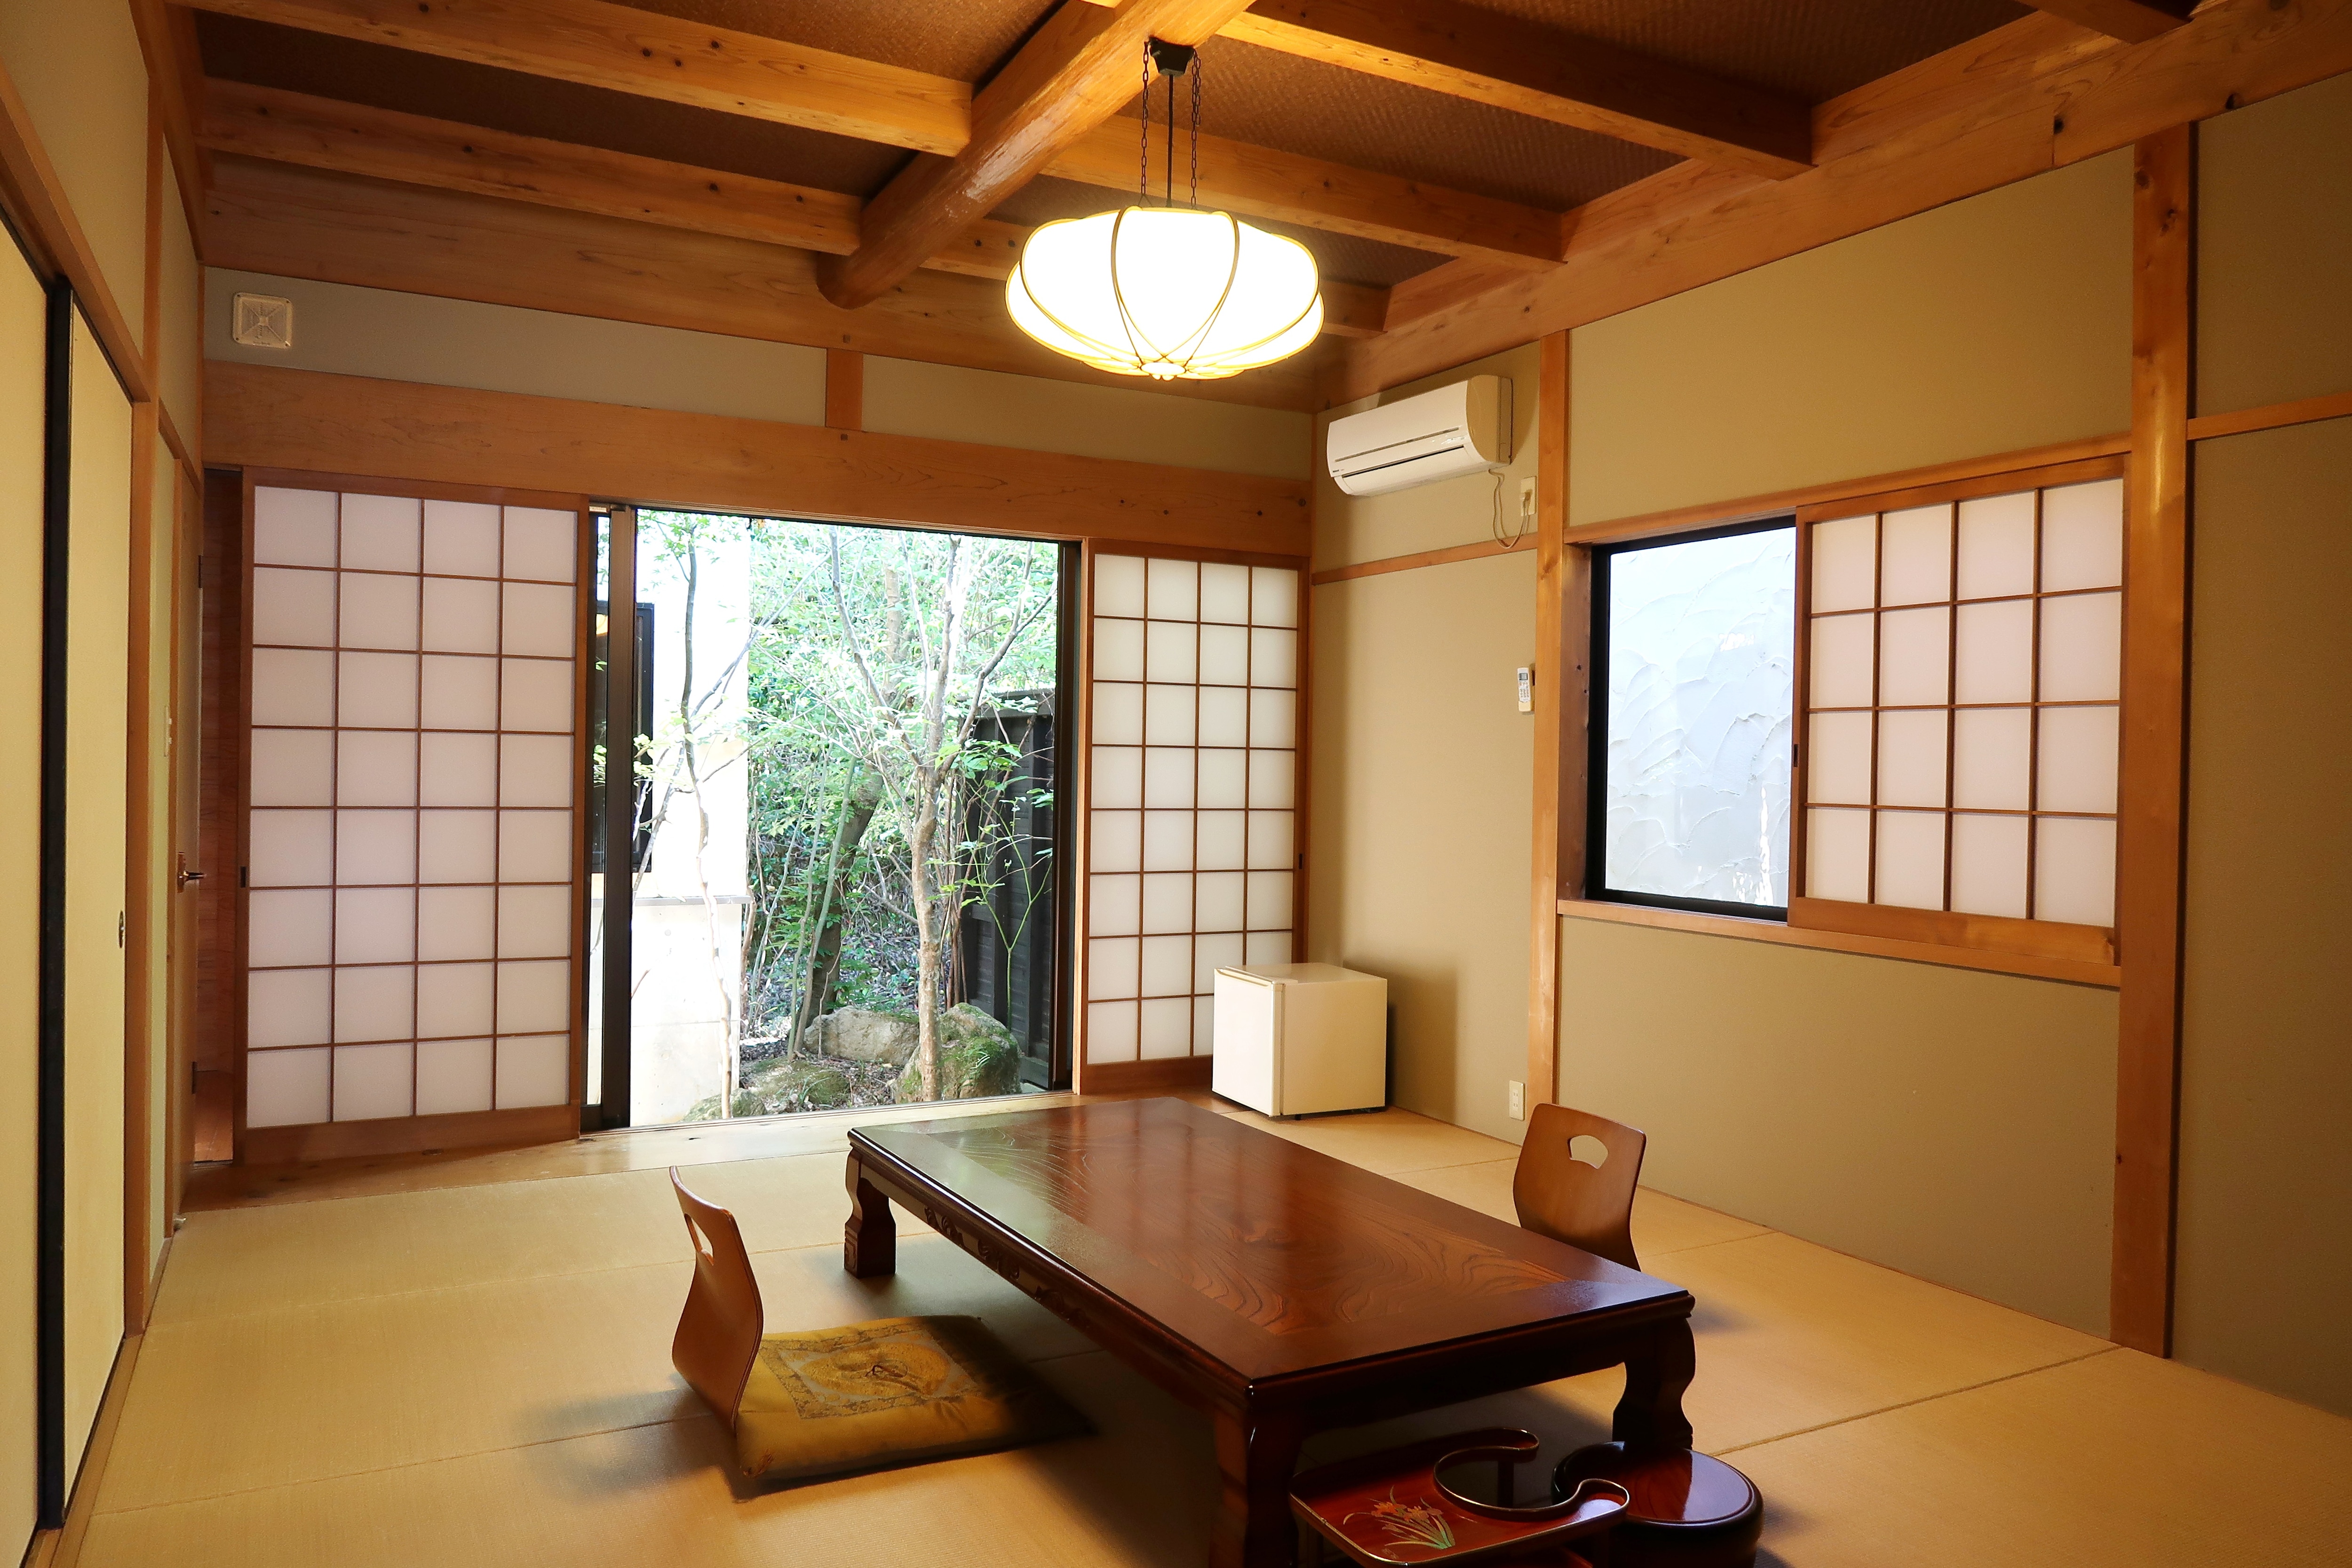 Room with bath (10 tatami mats)